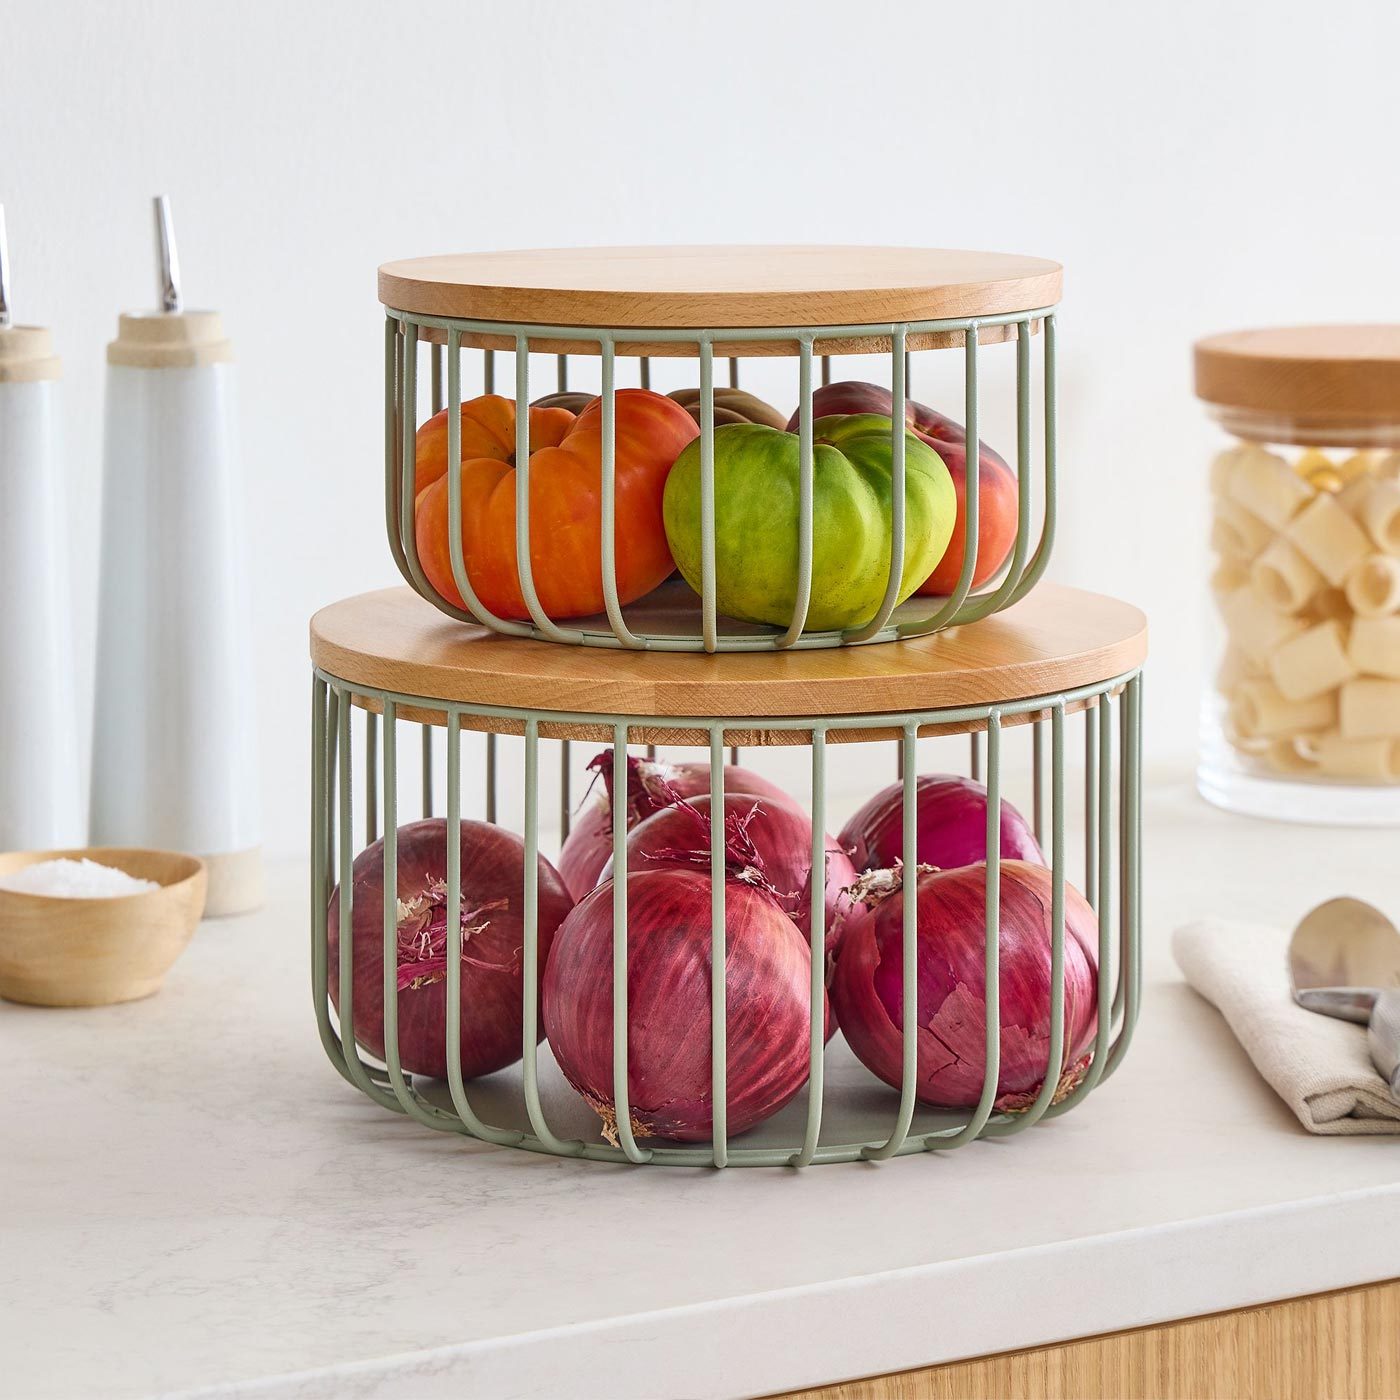 Vegetable Storage Rack Designs l Kitchen Storage Ideas l Ideas for Storing  Veggie l Vegetable Racks 